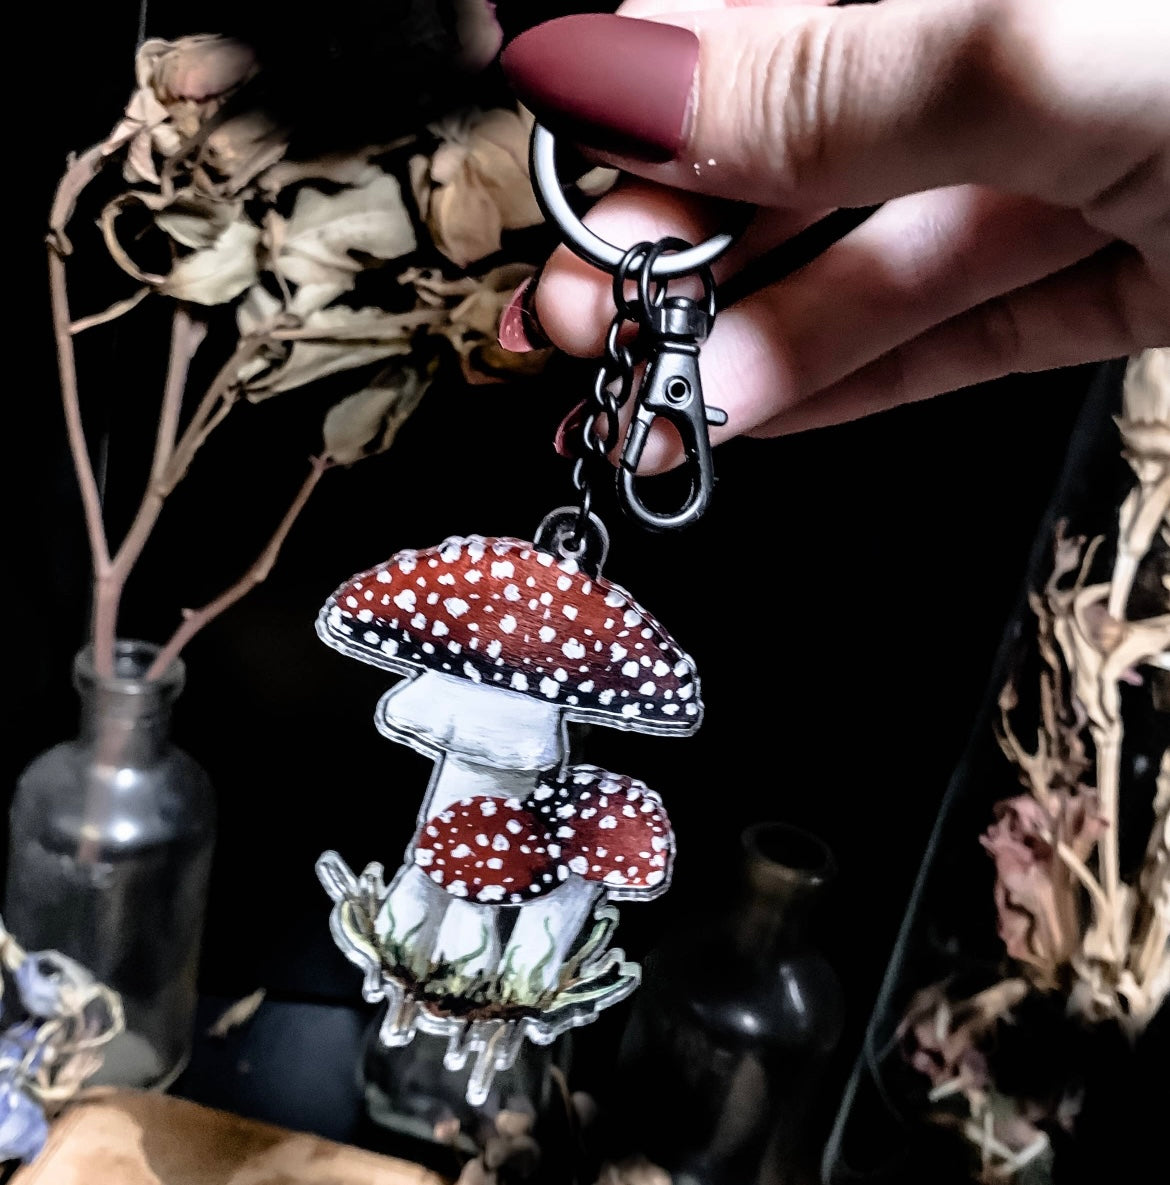 Reaowazo Mushroom Chain and Spike Chain Cute Colorful Waist Chain Punk Goth Keychains Harajuku Accessories